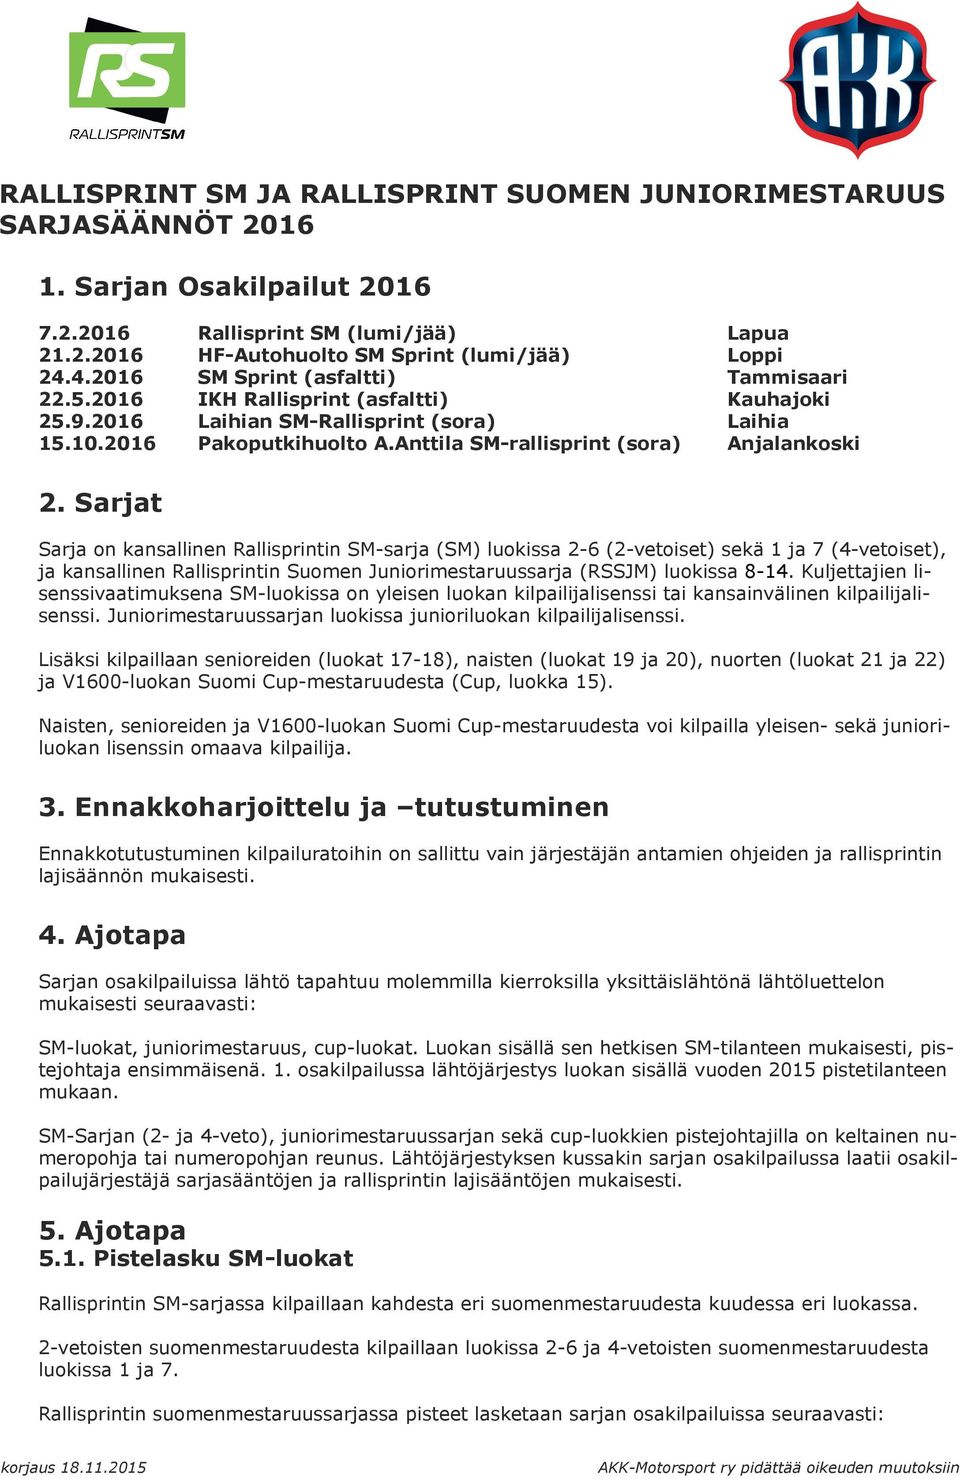 Anttila SM-rallisprint (sora) Anjalankoski 2.